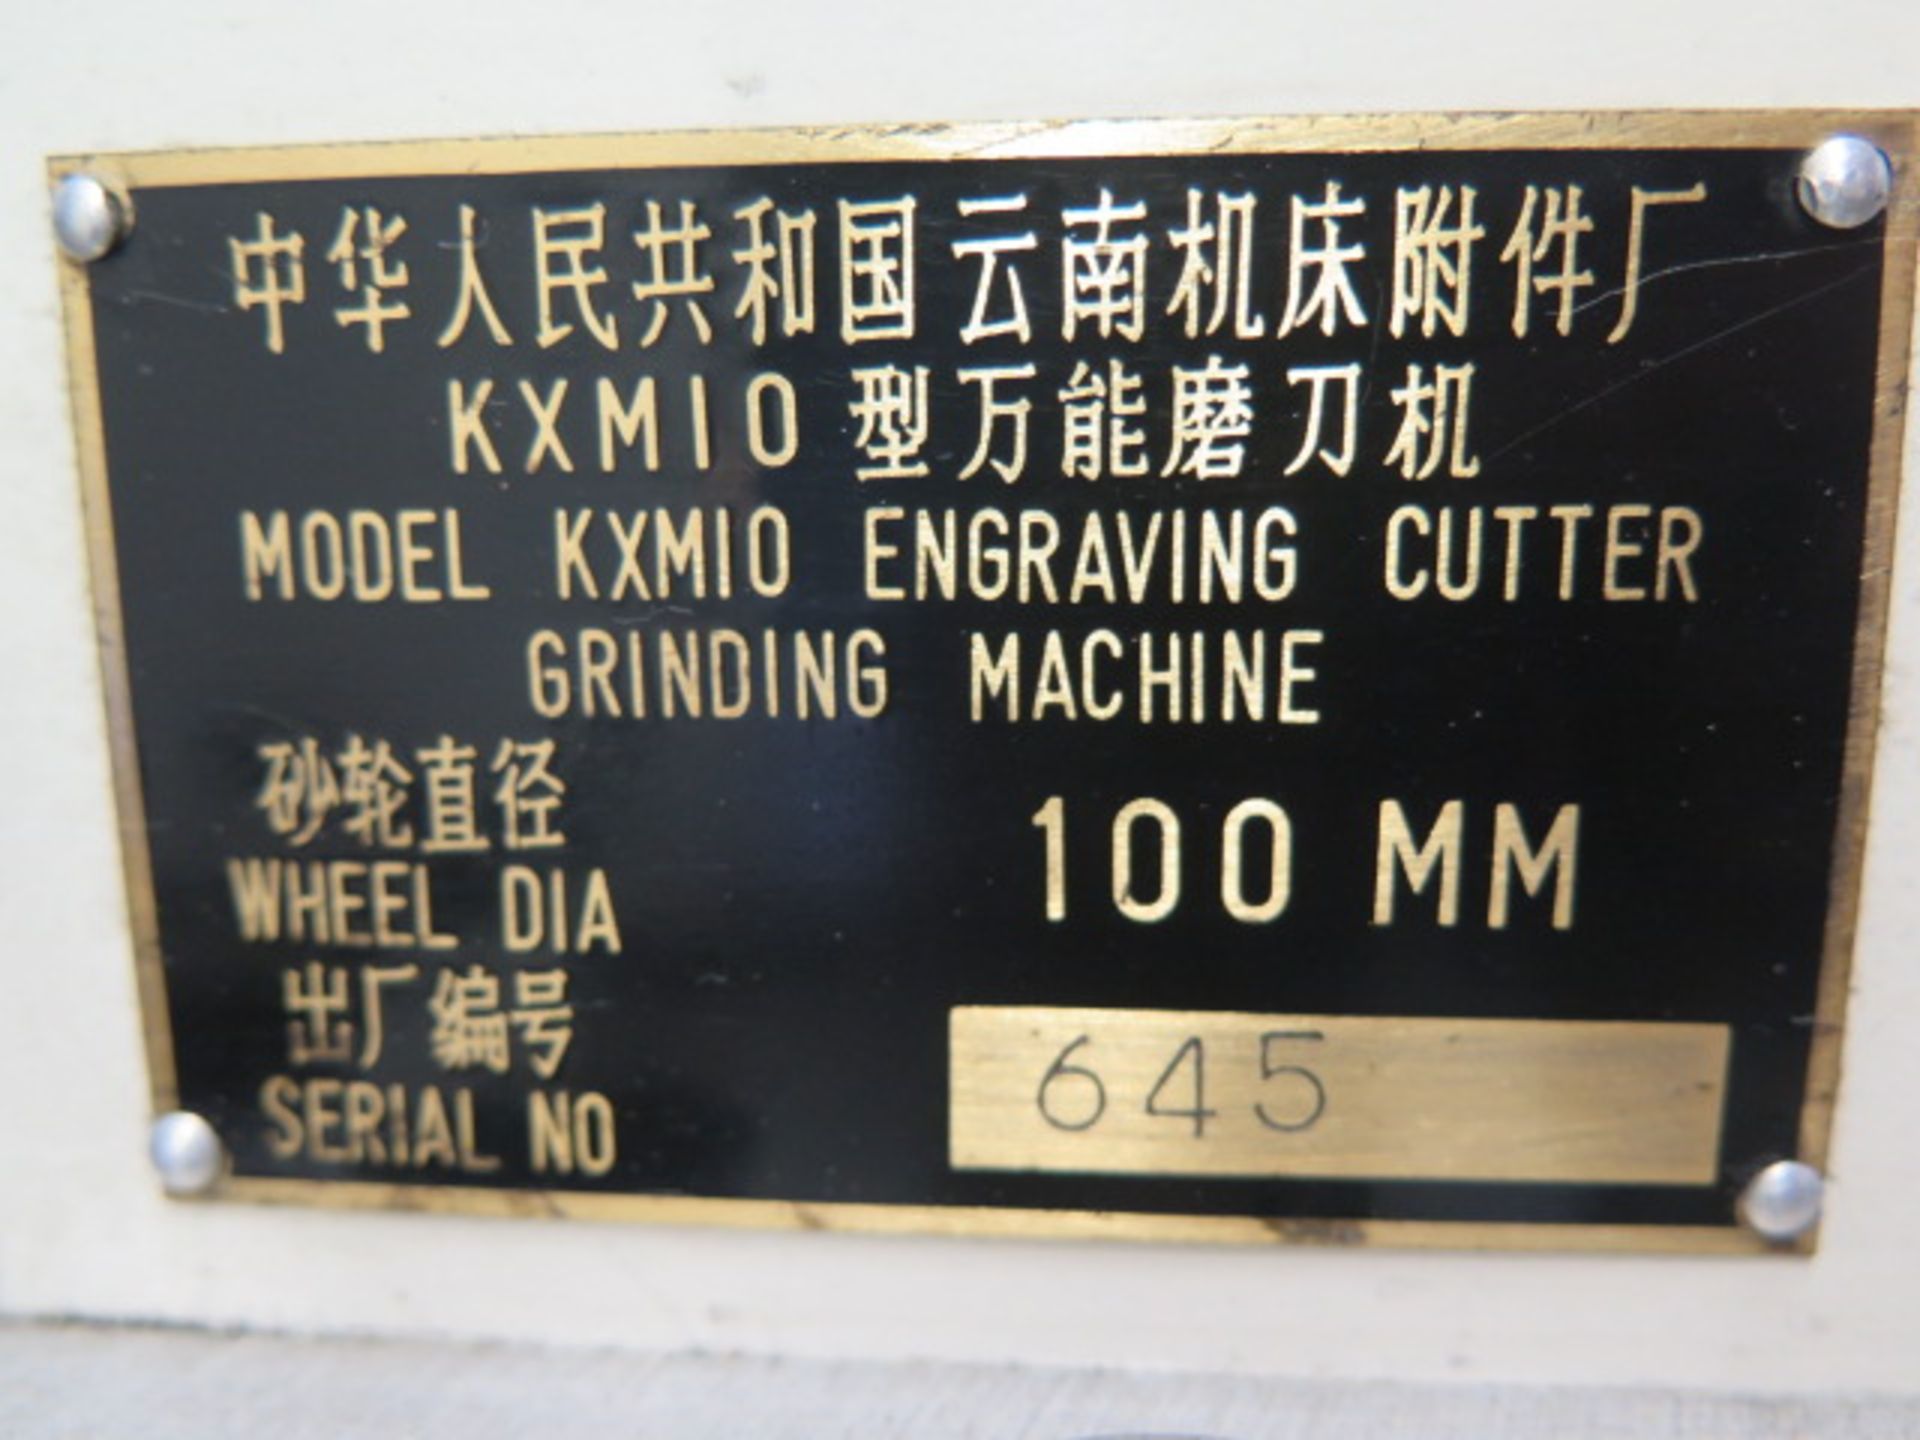 Import mdl. KXM10 Single-Lip Tool Grinder s/n 645 w/ Cabinet Base, Diamond Grinding Wheel, Collets - Image 7 of 7